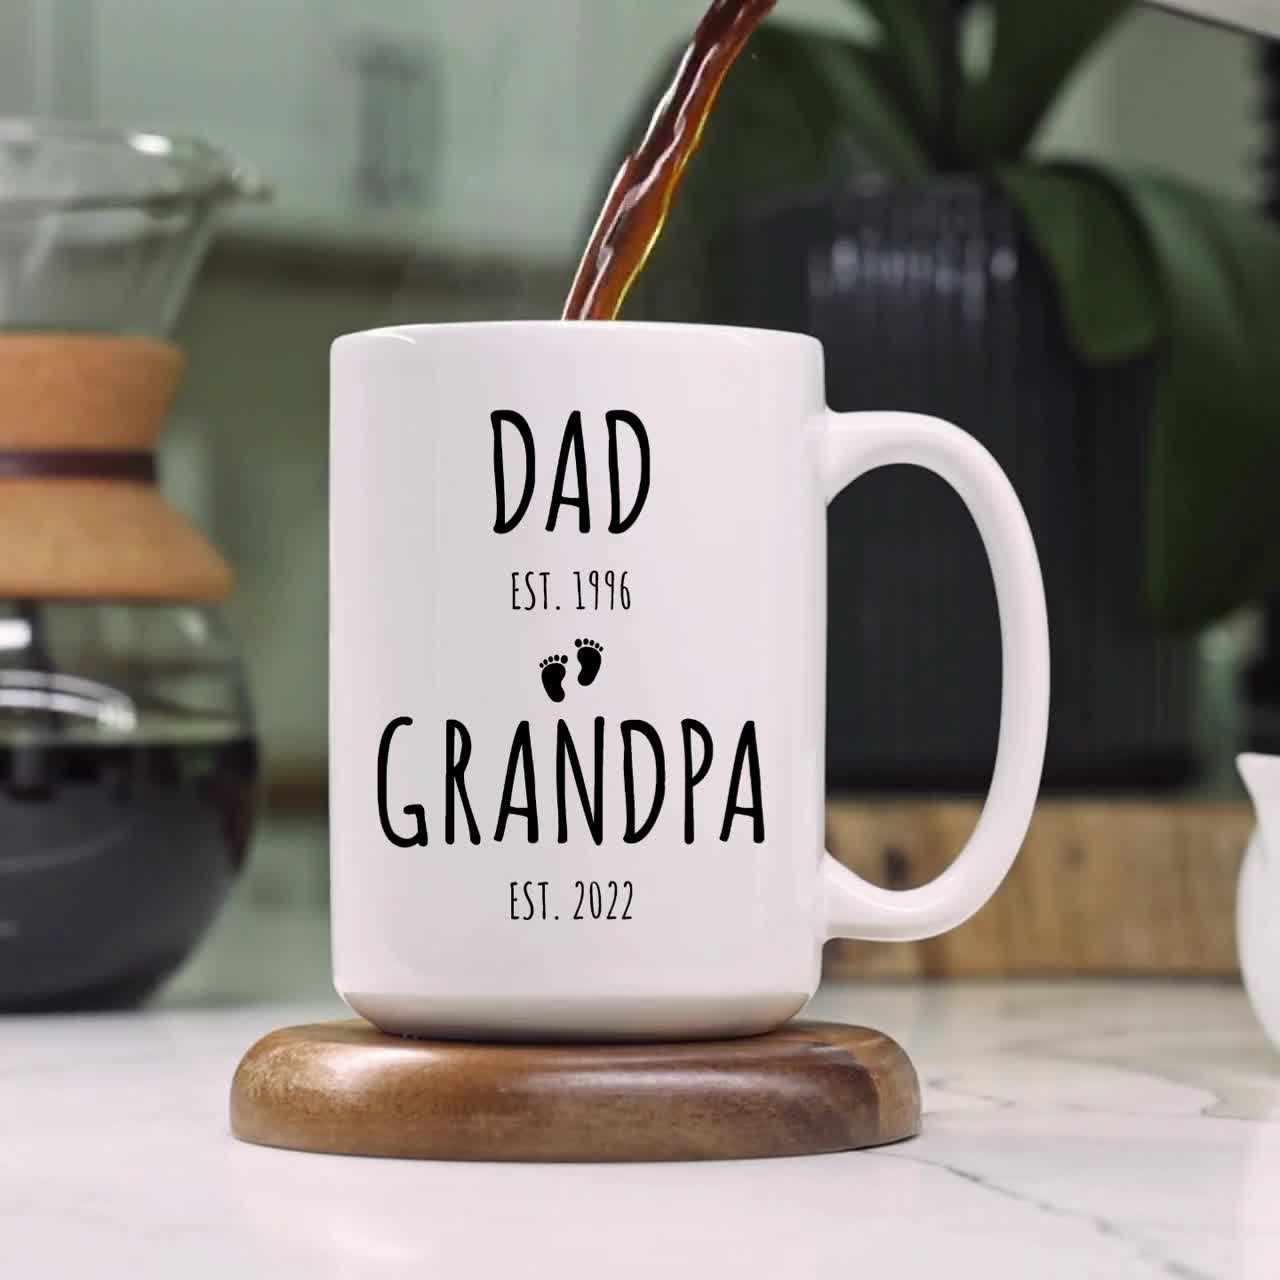 Bubba Mug, Bubba Coffee Mug, Grandpa Gift, Best Grandpa Gift,  Grandfather Present, Gift for Bubba, Dad's Day Gift: Coffee Cups & Mugs